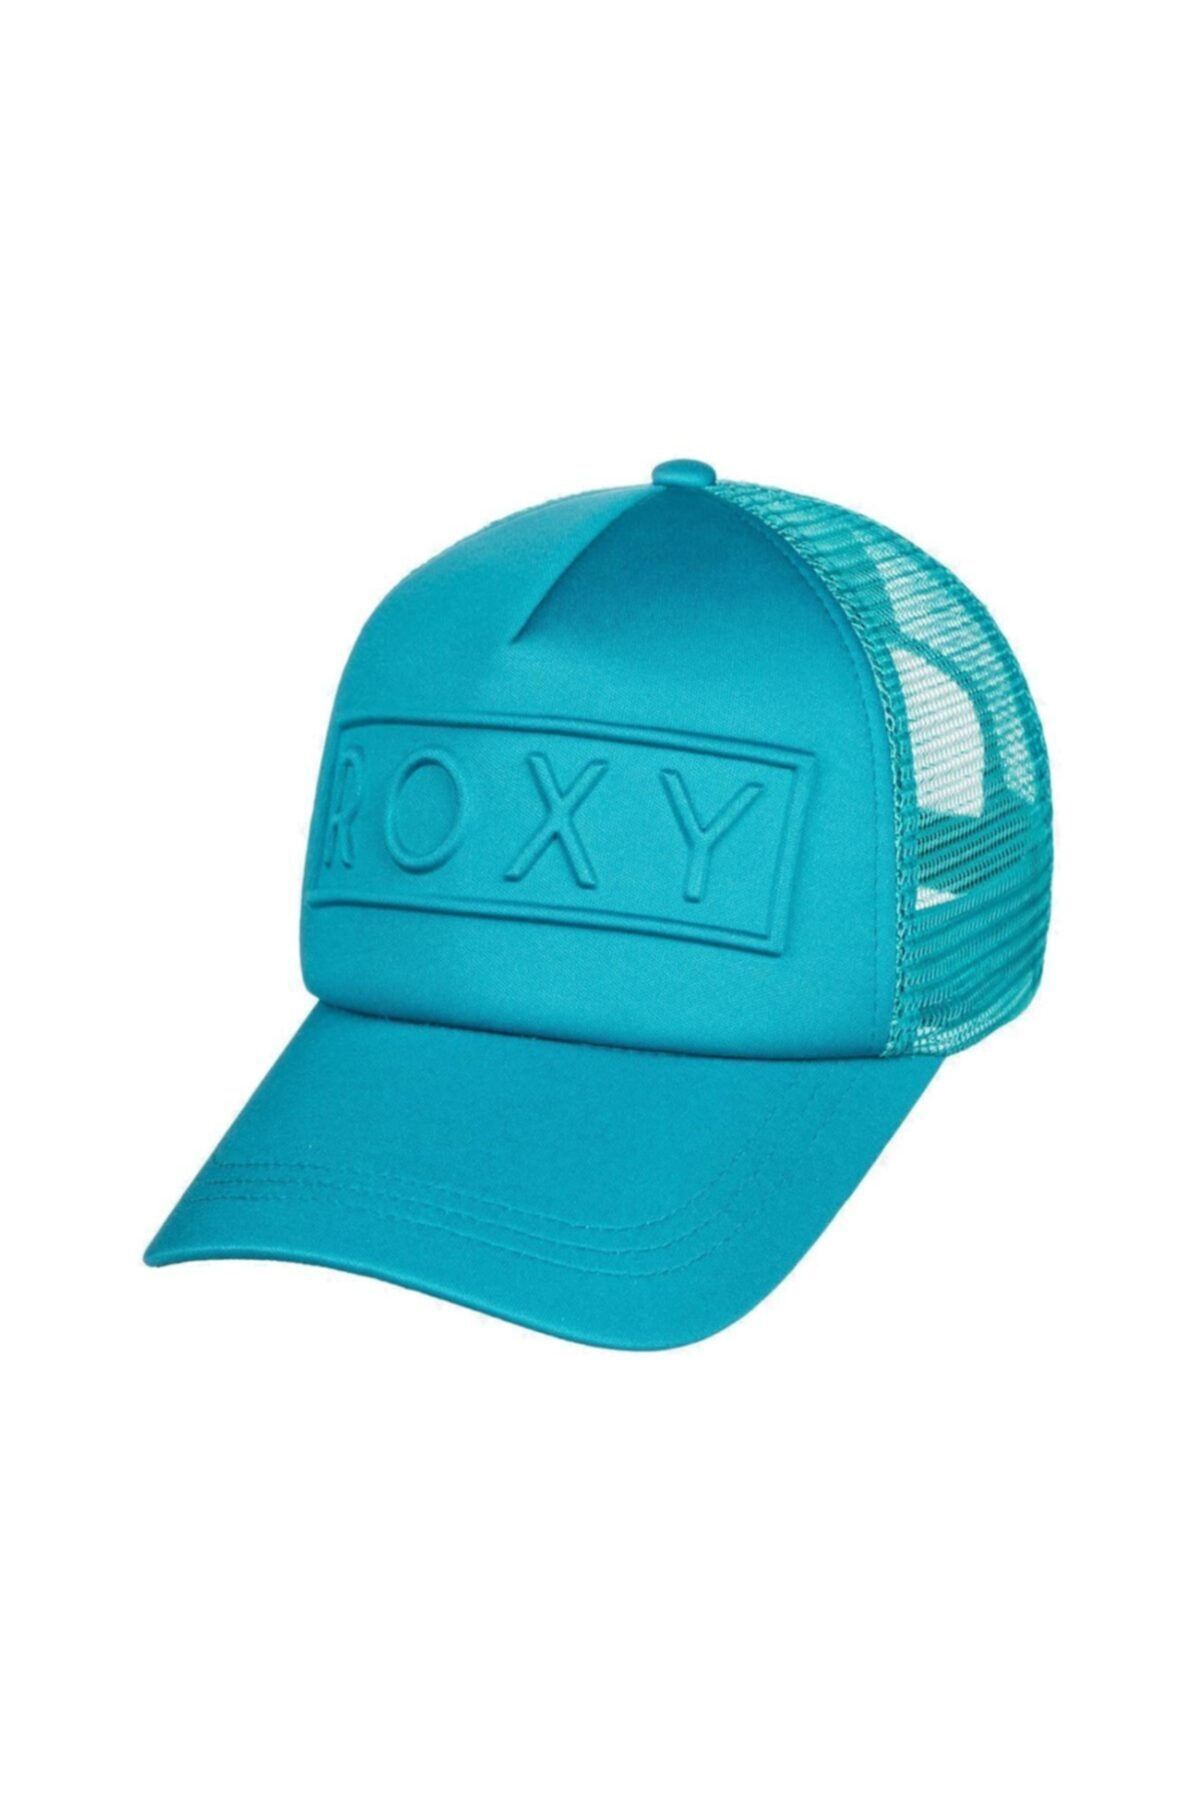 Roxy Brighter Day Şapka